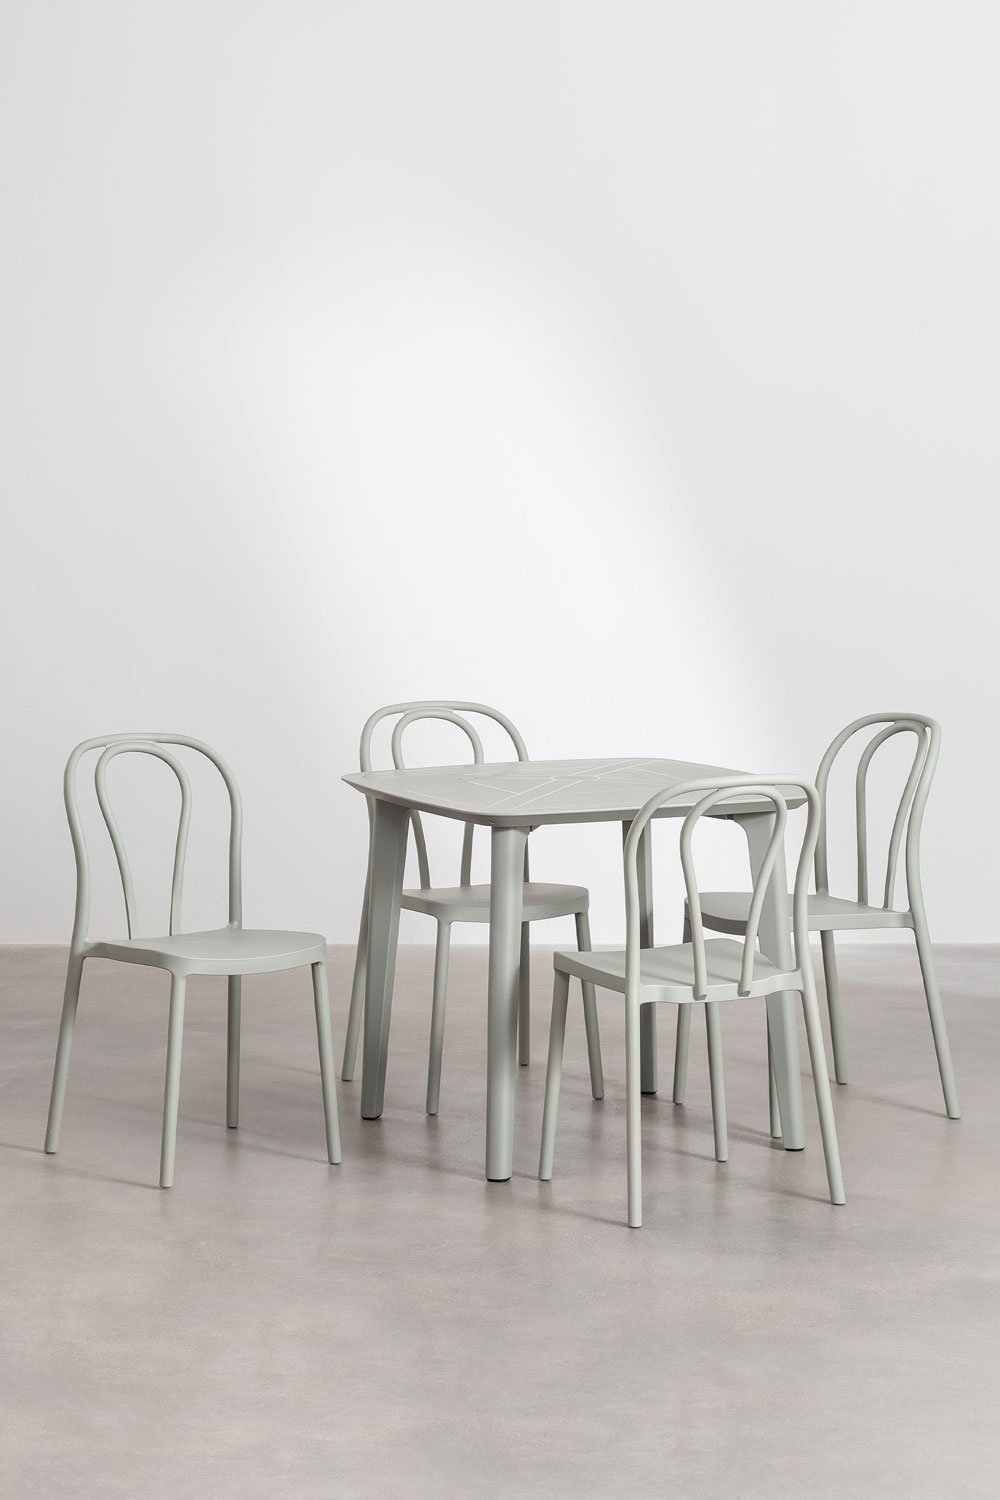 Set vierkante tafel in polyethyleen (85x85 cm) Nati en 4 stapelbare tuinstoelen Mizzi, galerij beeld 1